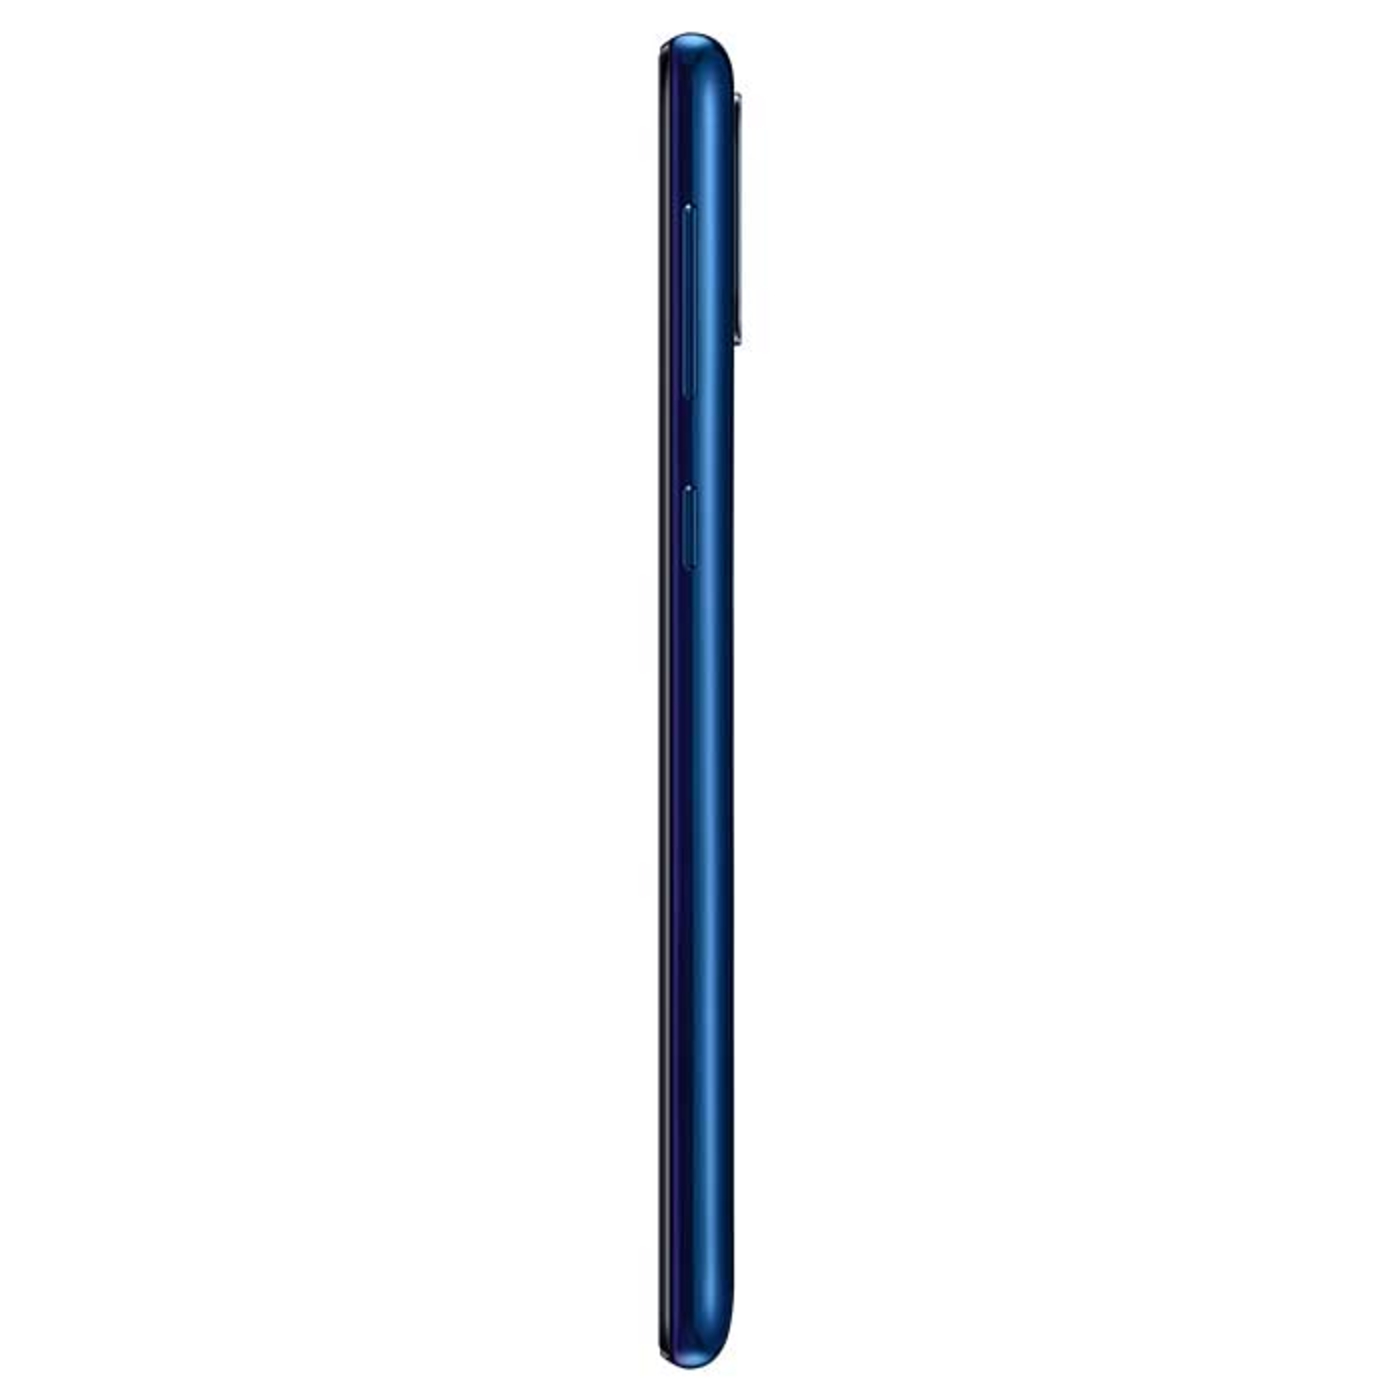 Celular SAMSUNG Galaxy M31 128GB Azul + Cover Azul